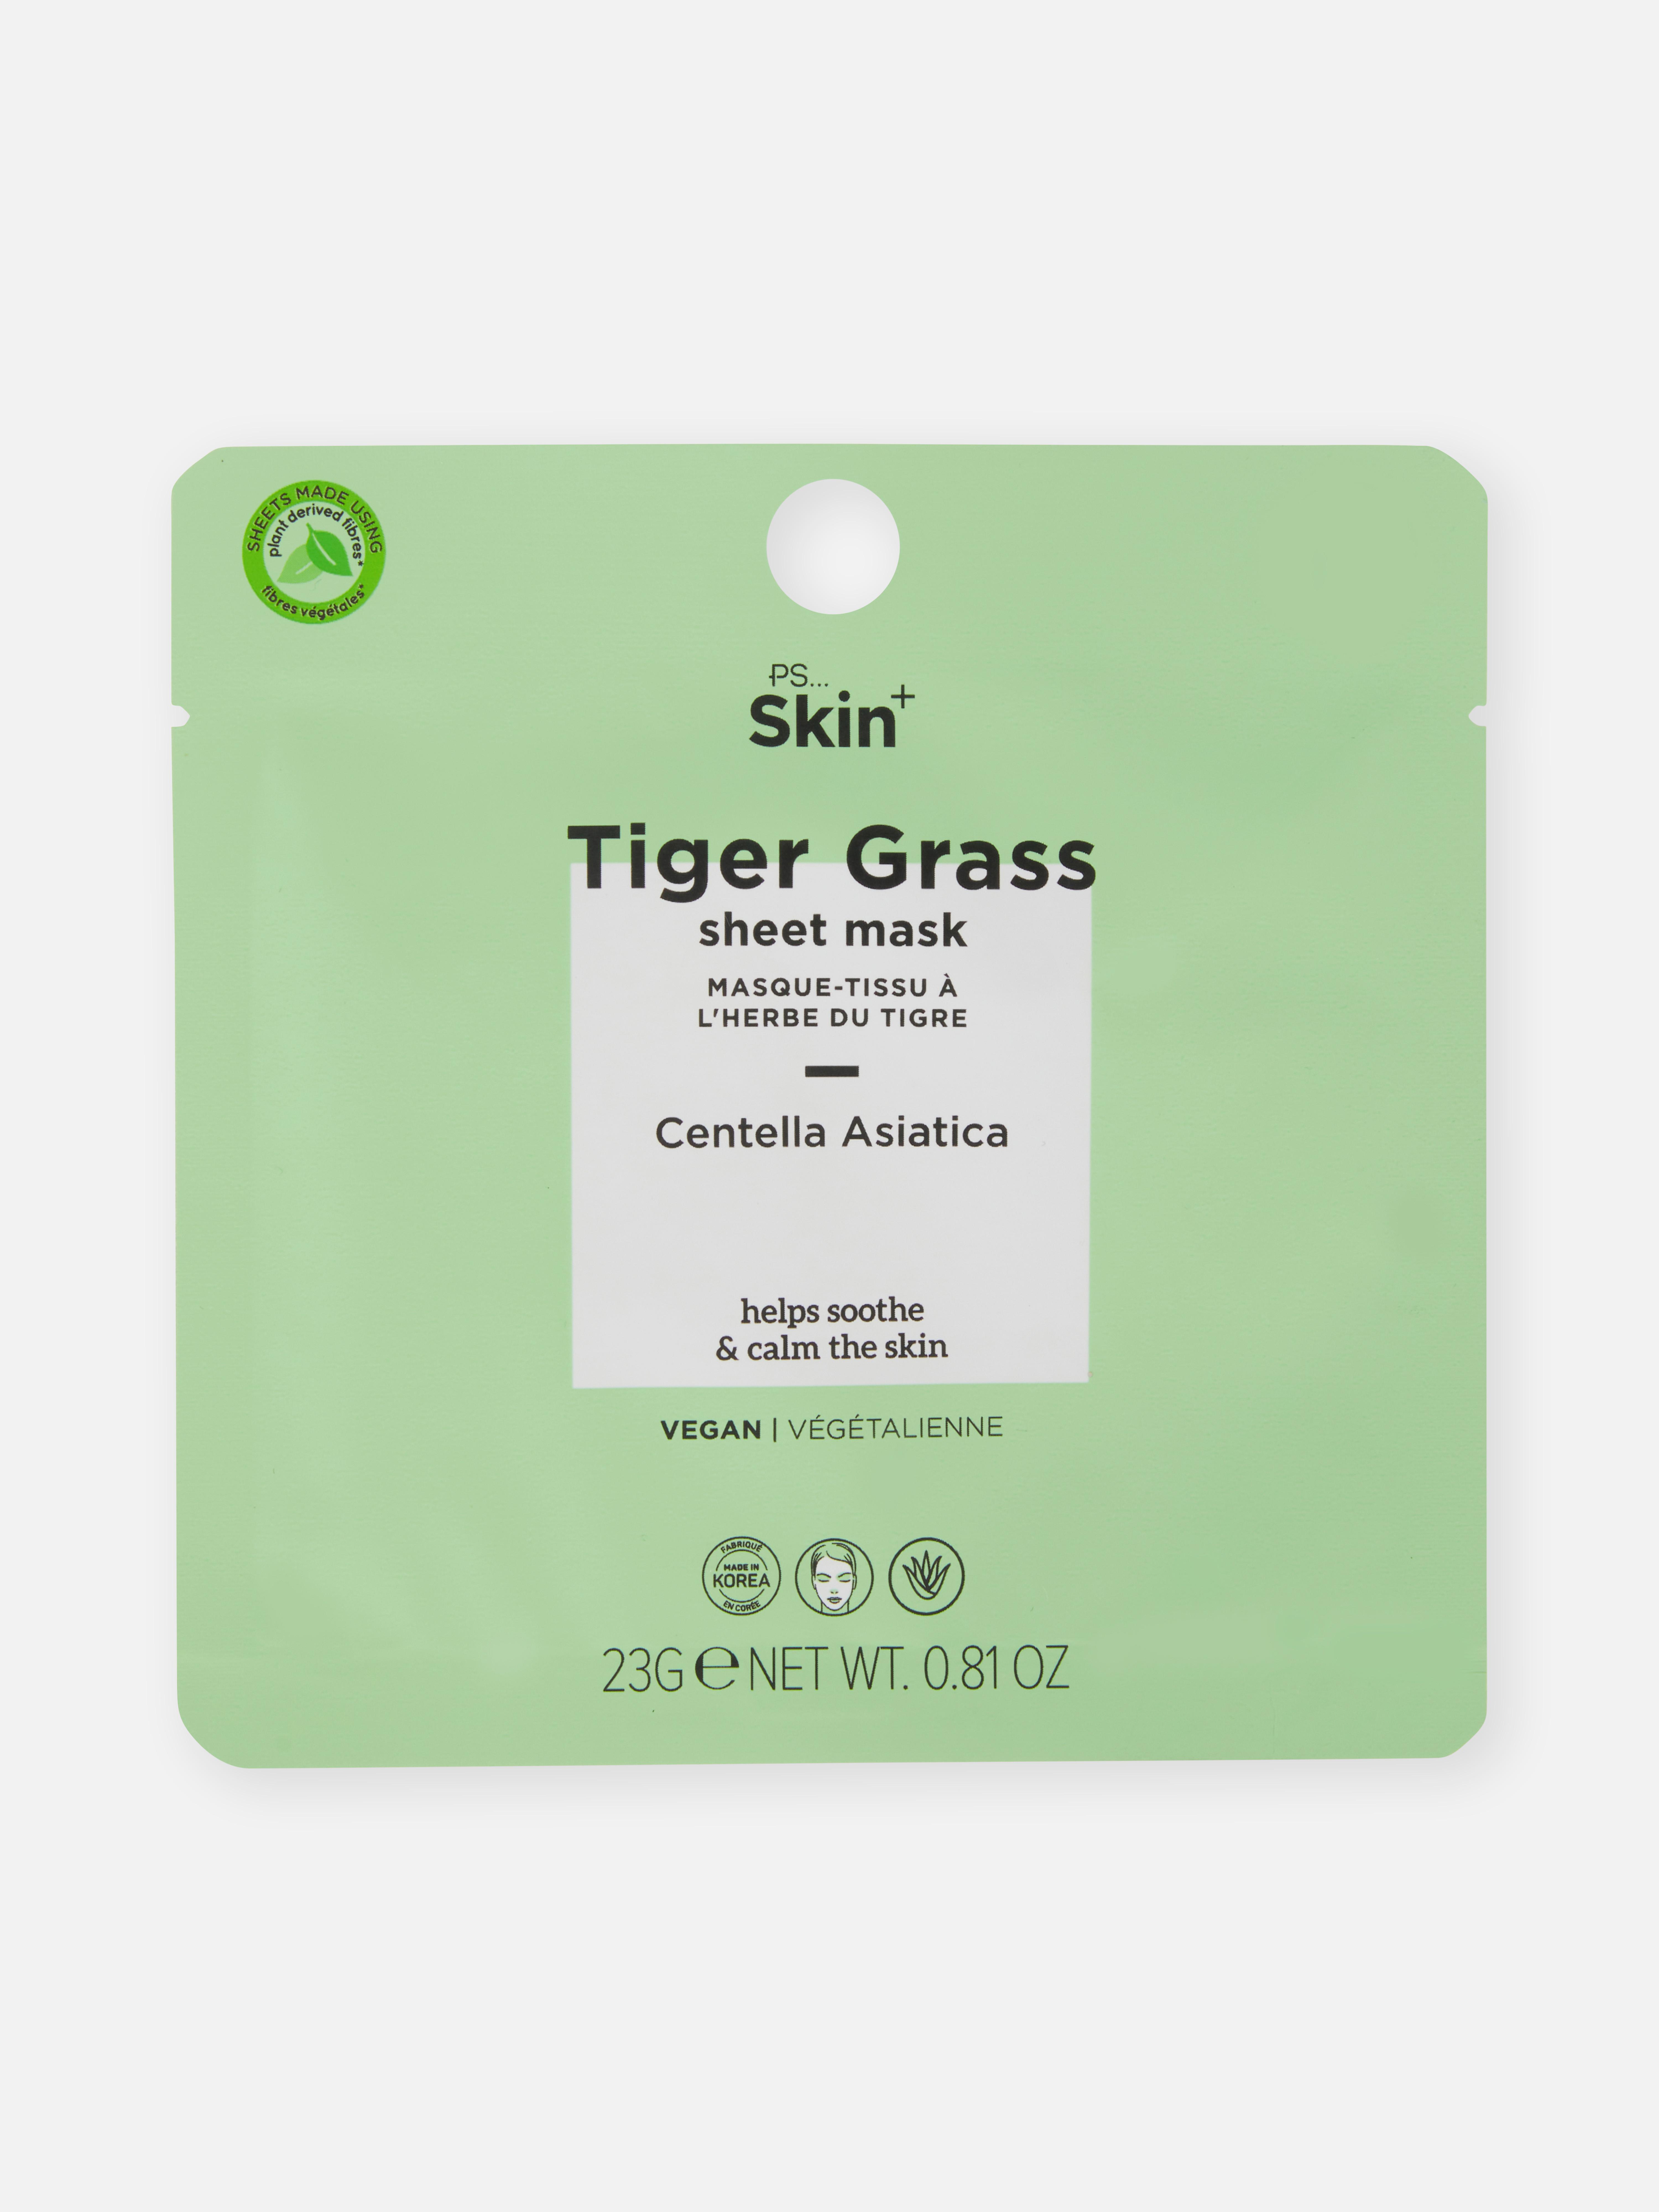 PS… Skin + Tiger Grass Sheet Mask